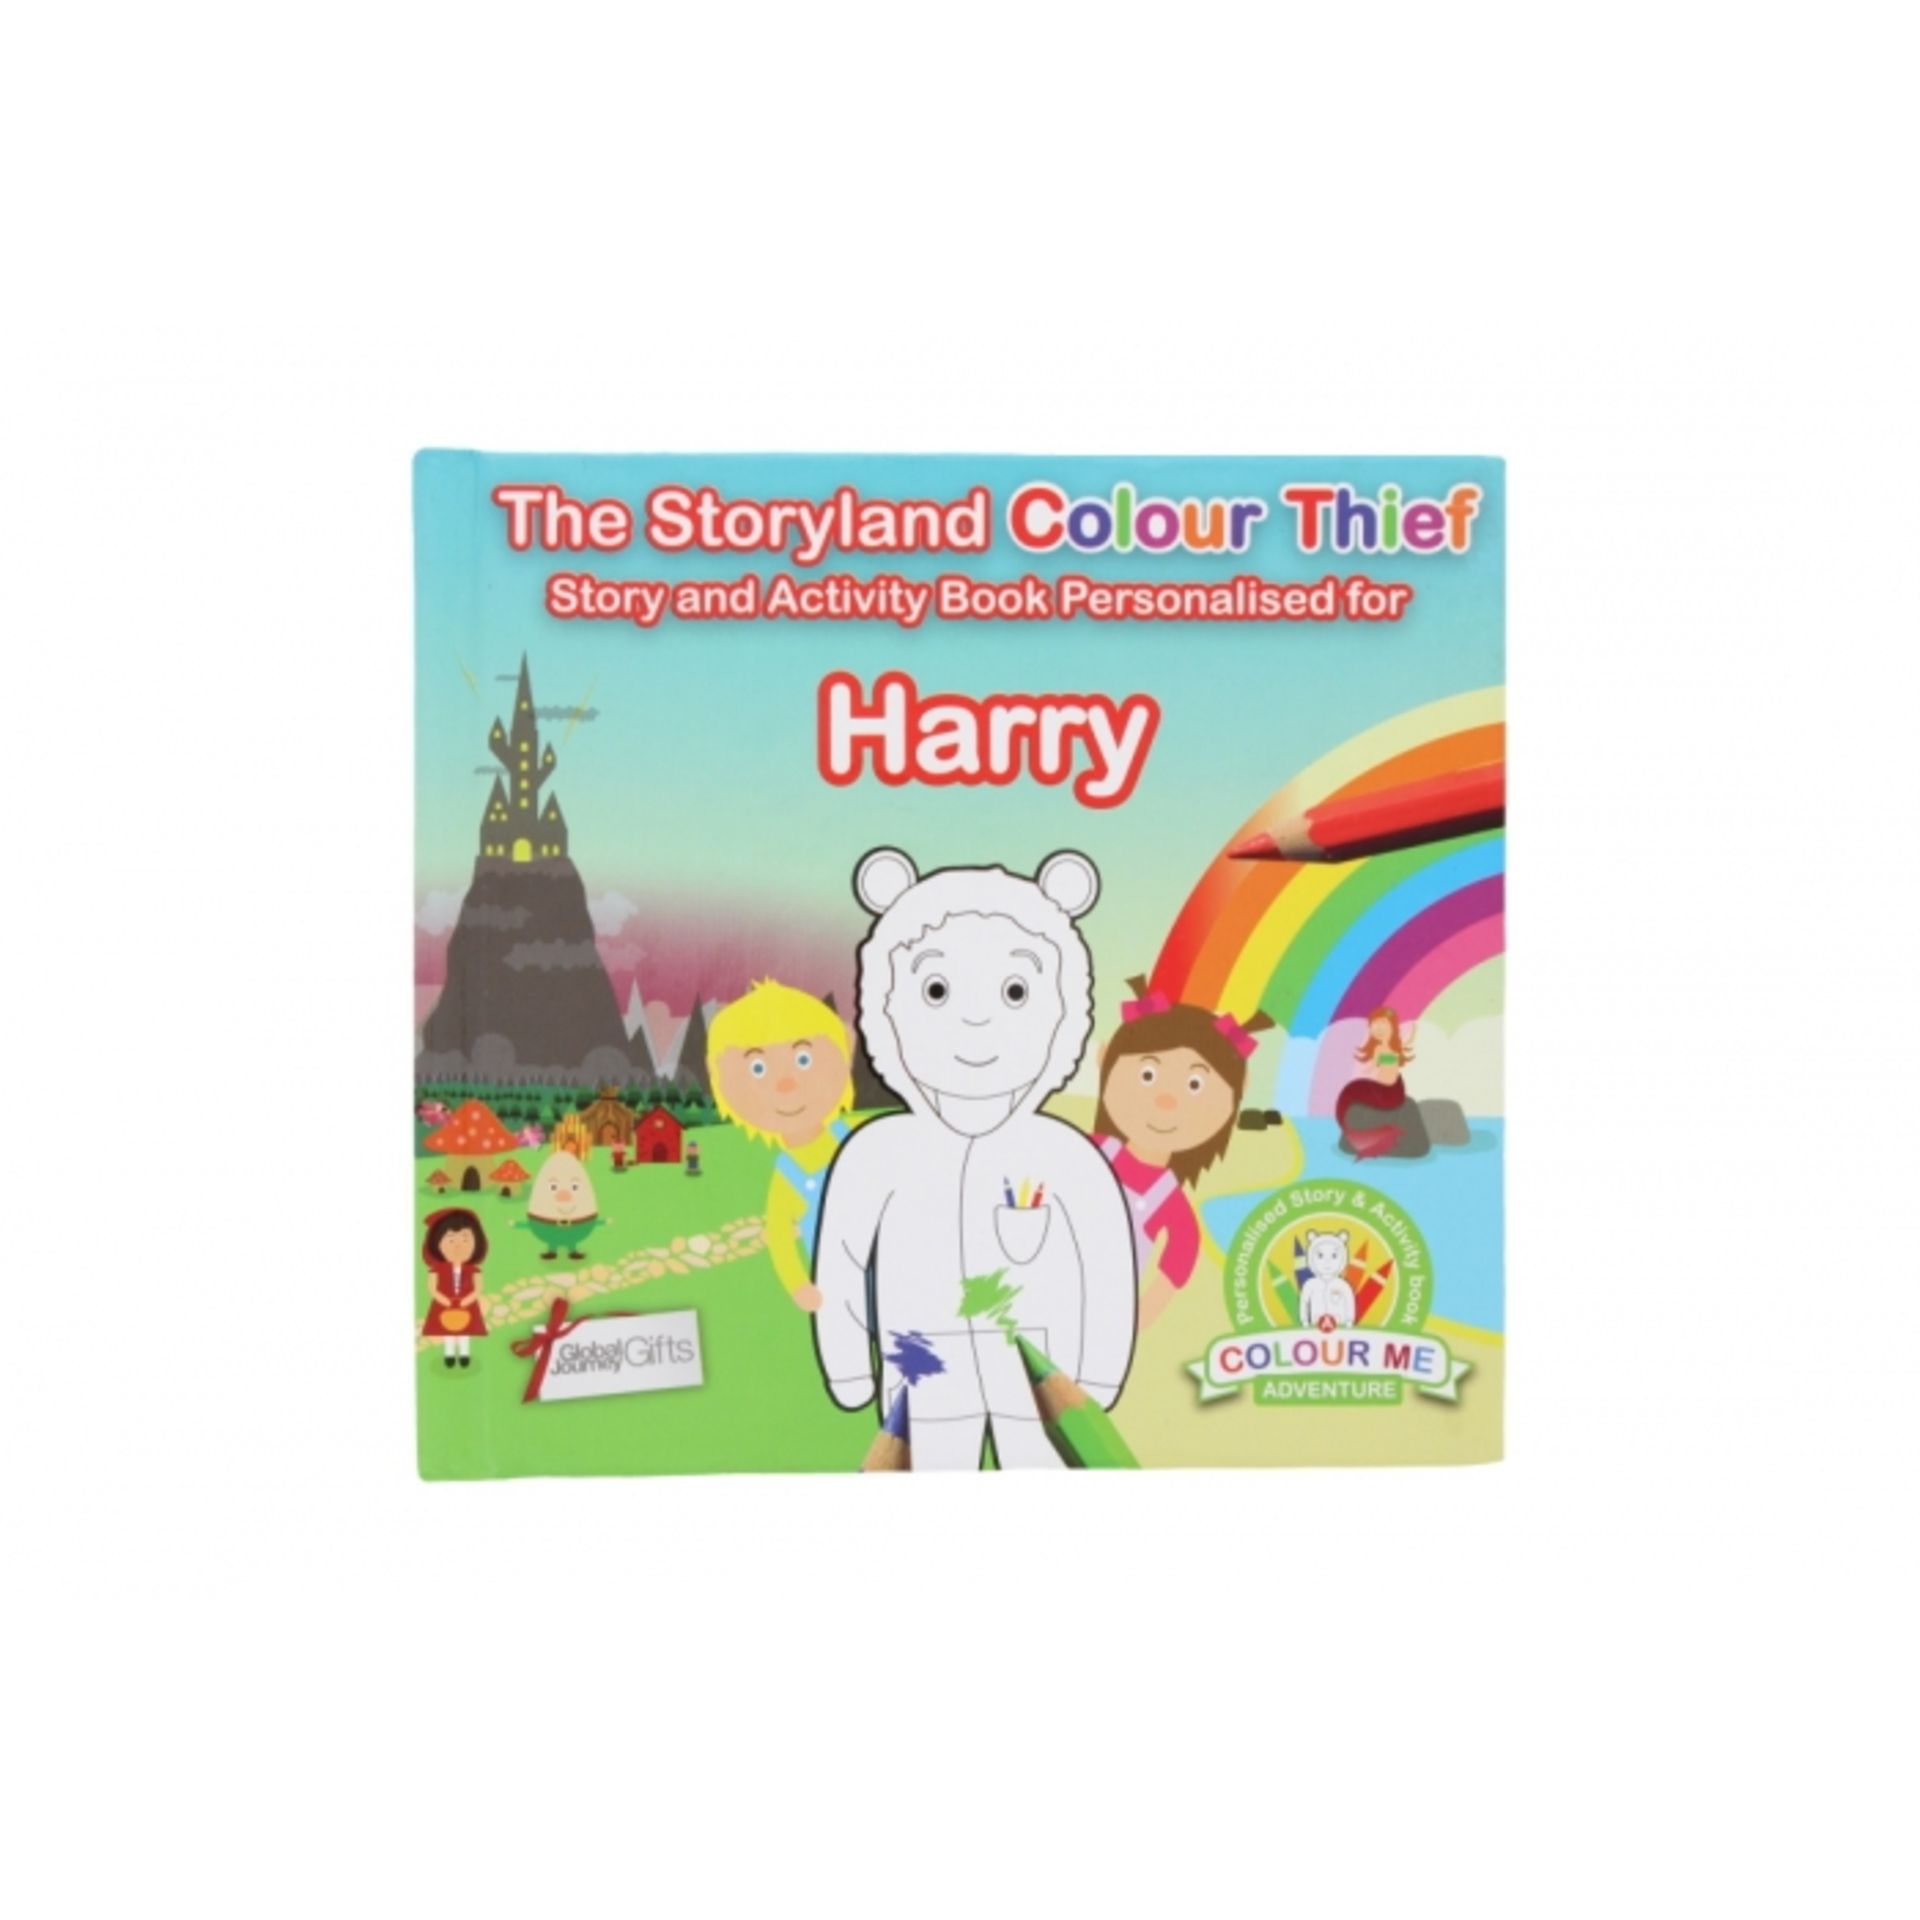 100 x Personalised Children Story & Colouring Books - eBay 3.